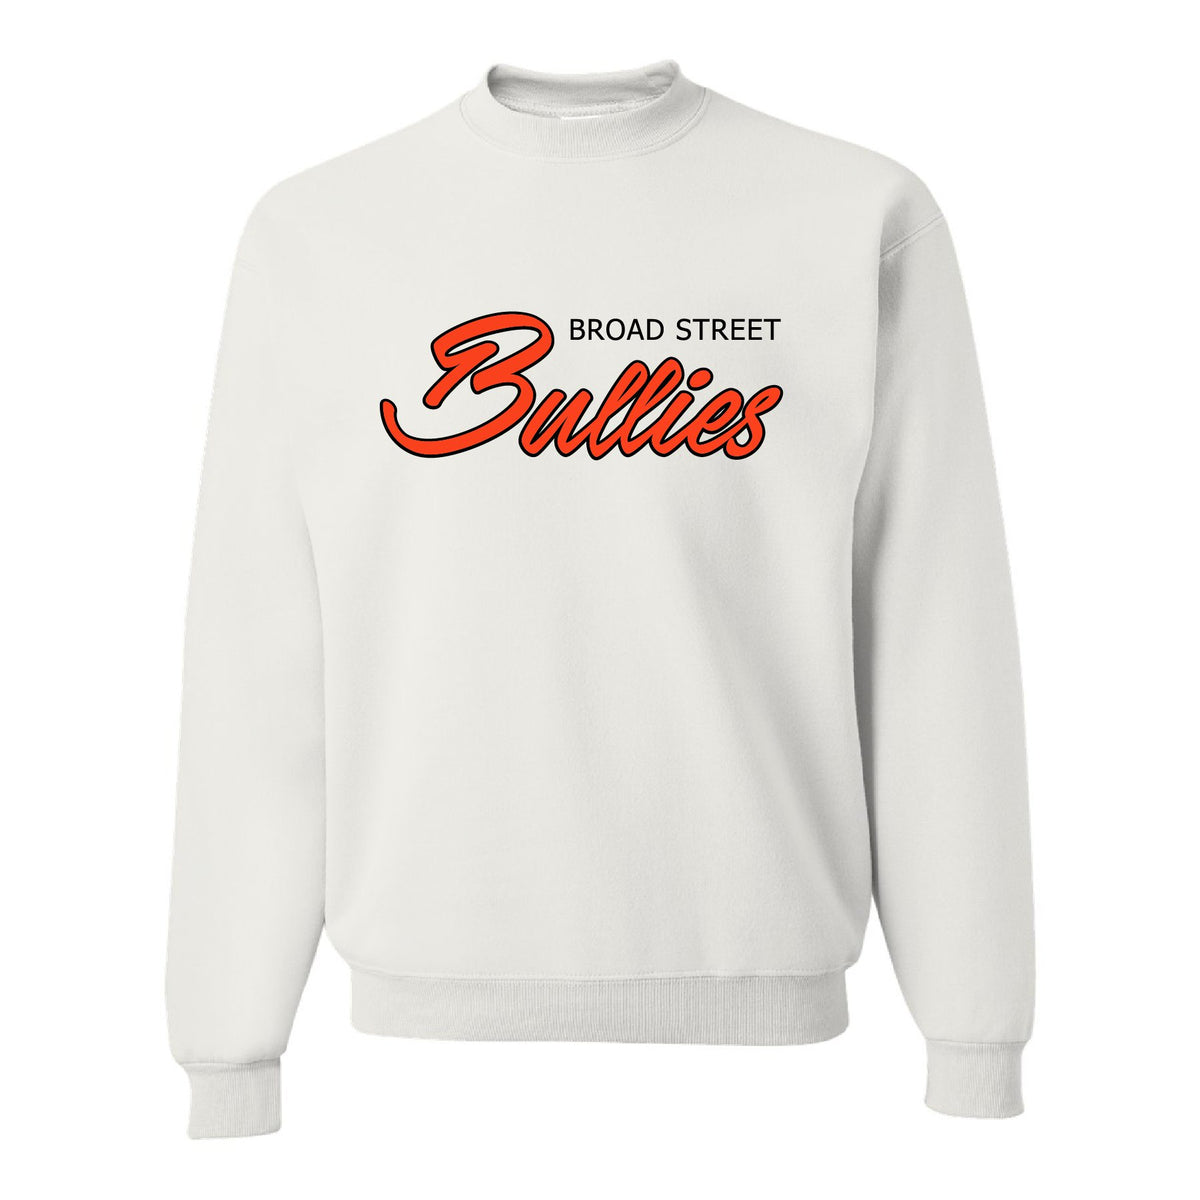 Philadelphia Flyers Broad Street Bullies Crew Sweatshirt